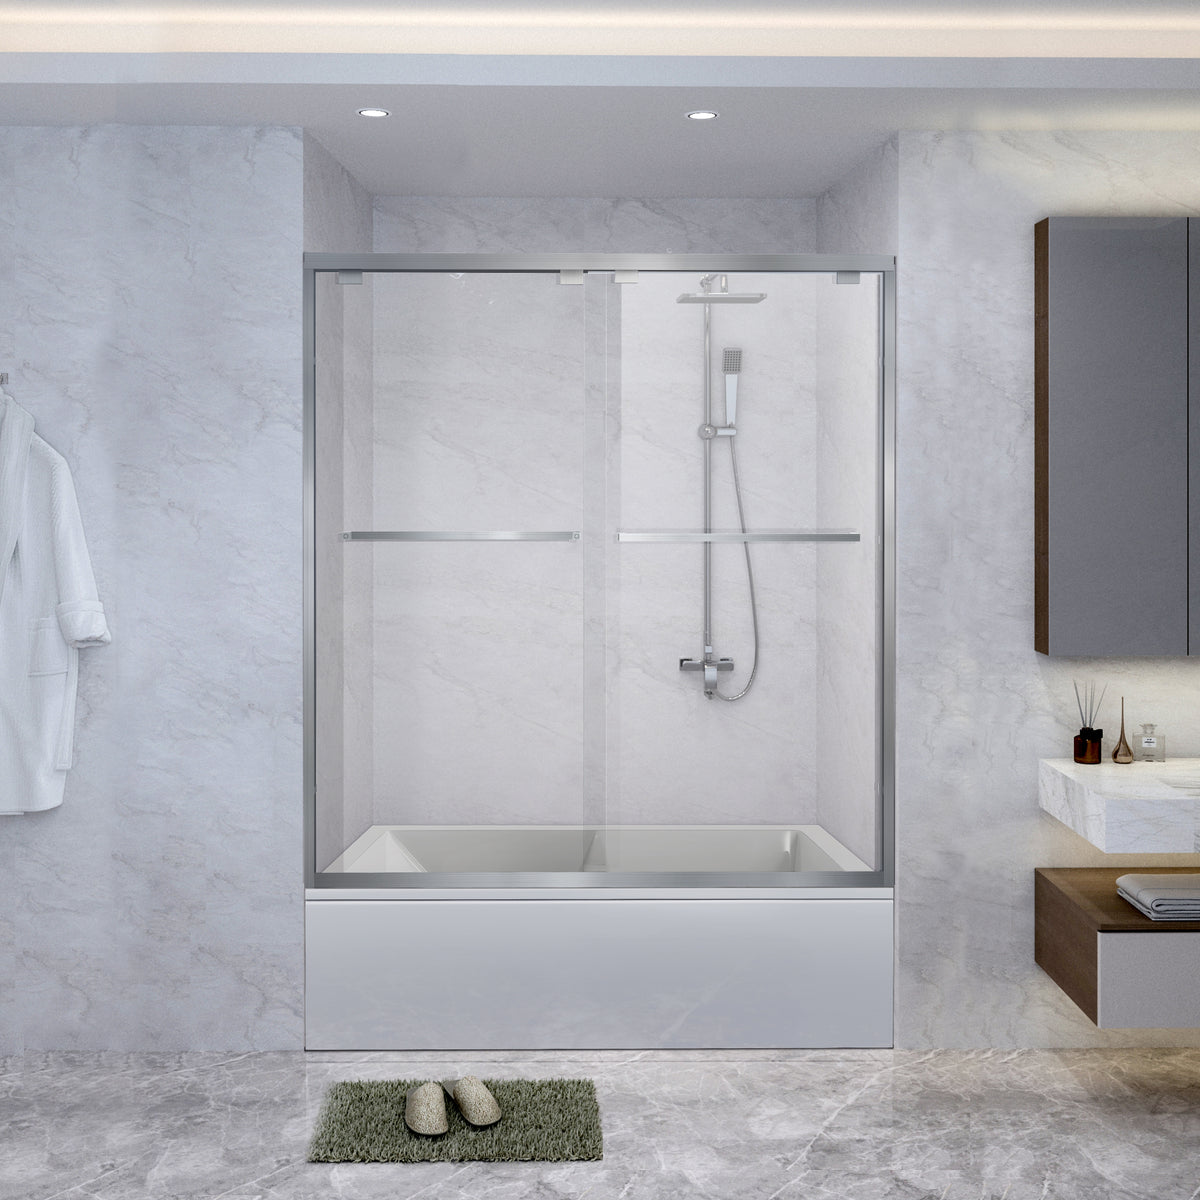 SL4U Sliding Tub Door, Glass Shower Door For Tub, Brushed Nickel Bathtub Shower Enclosure, 60"W x 58-62"H